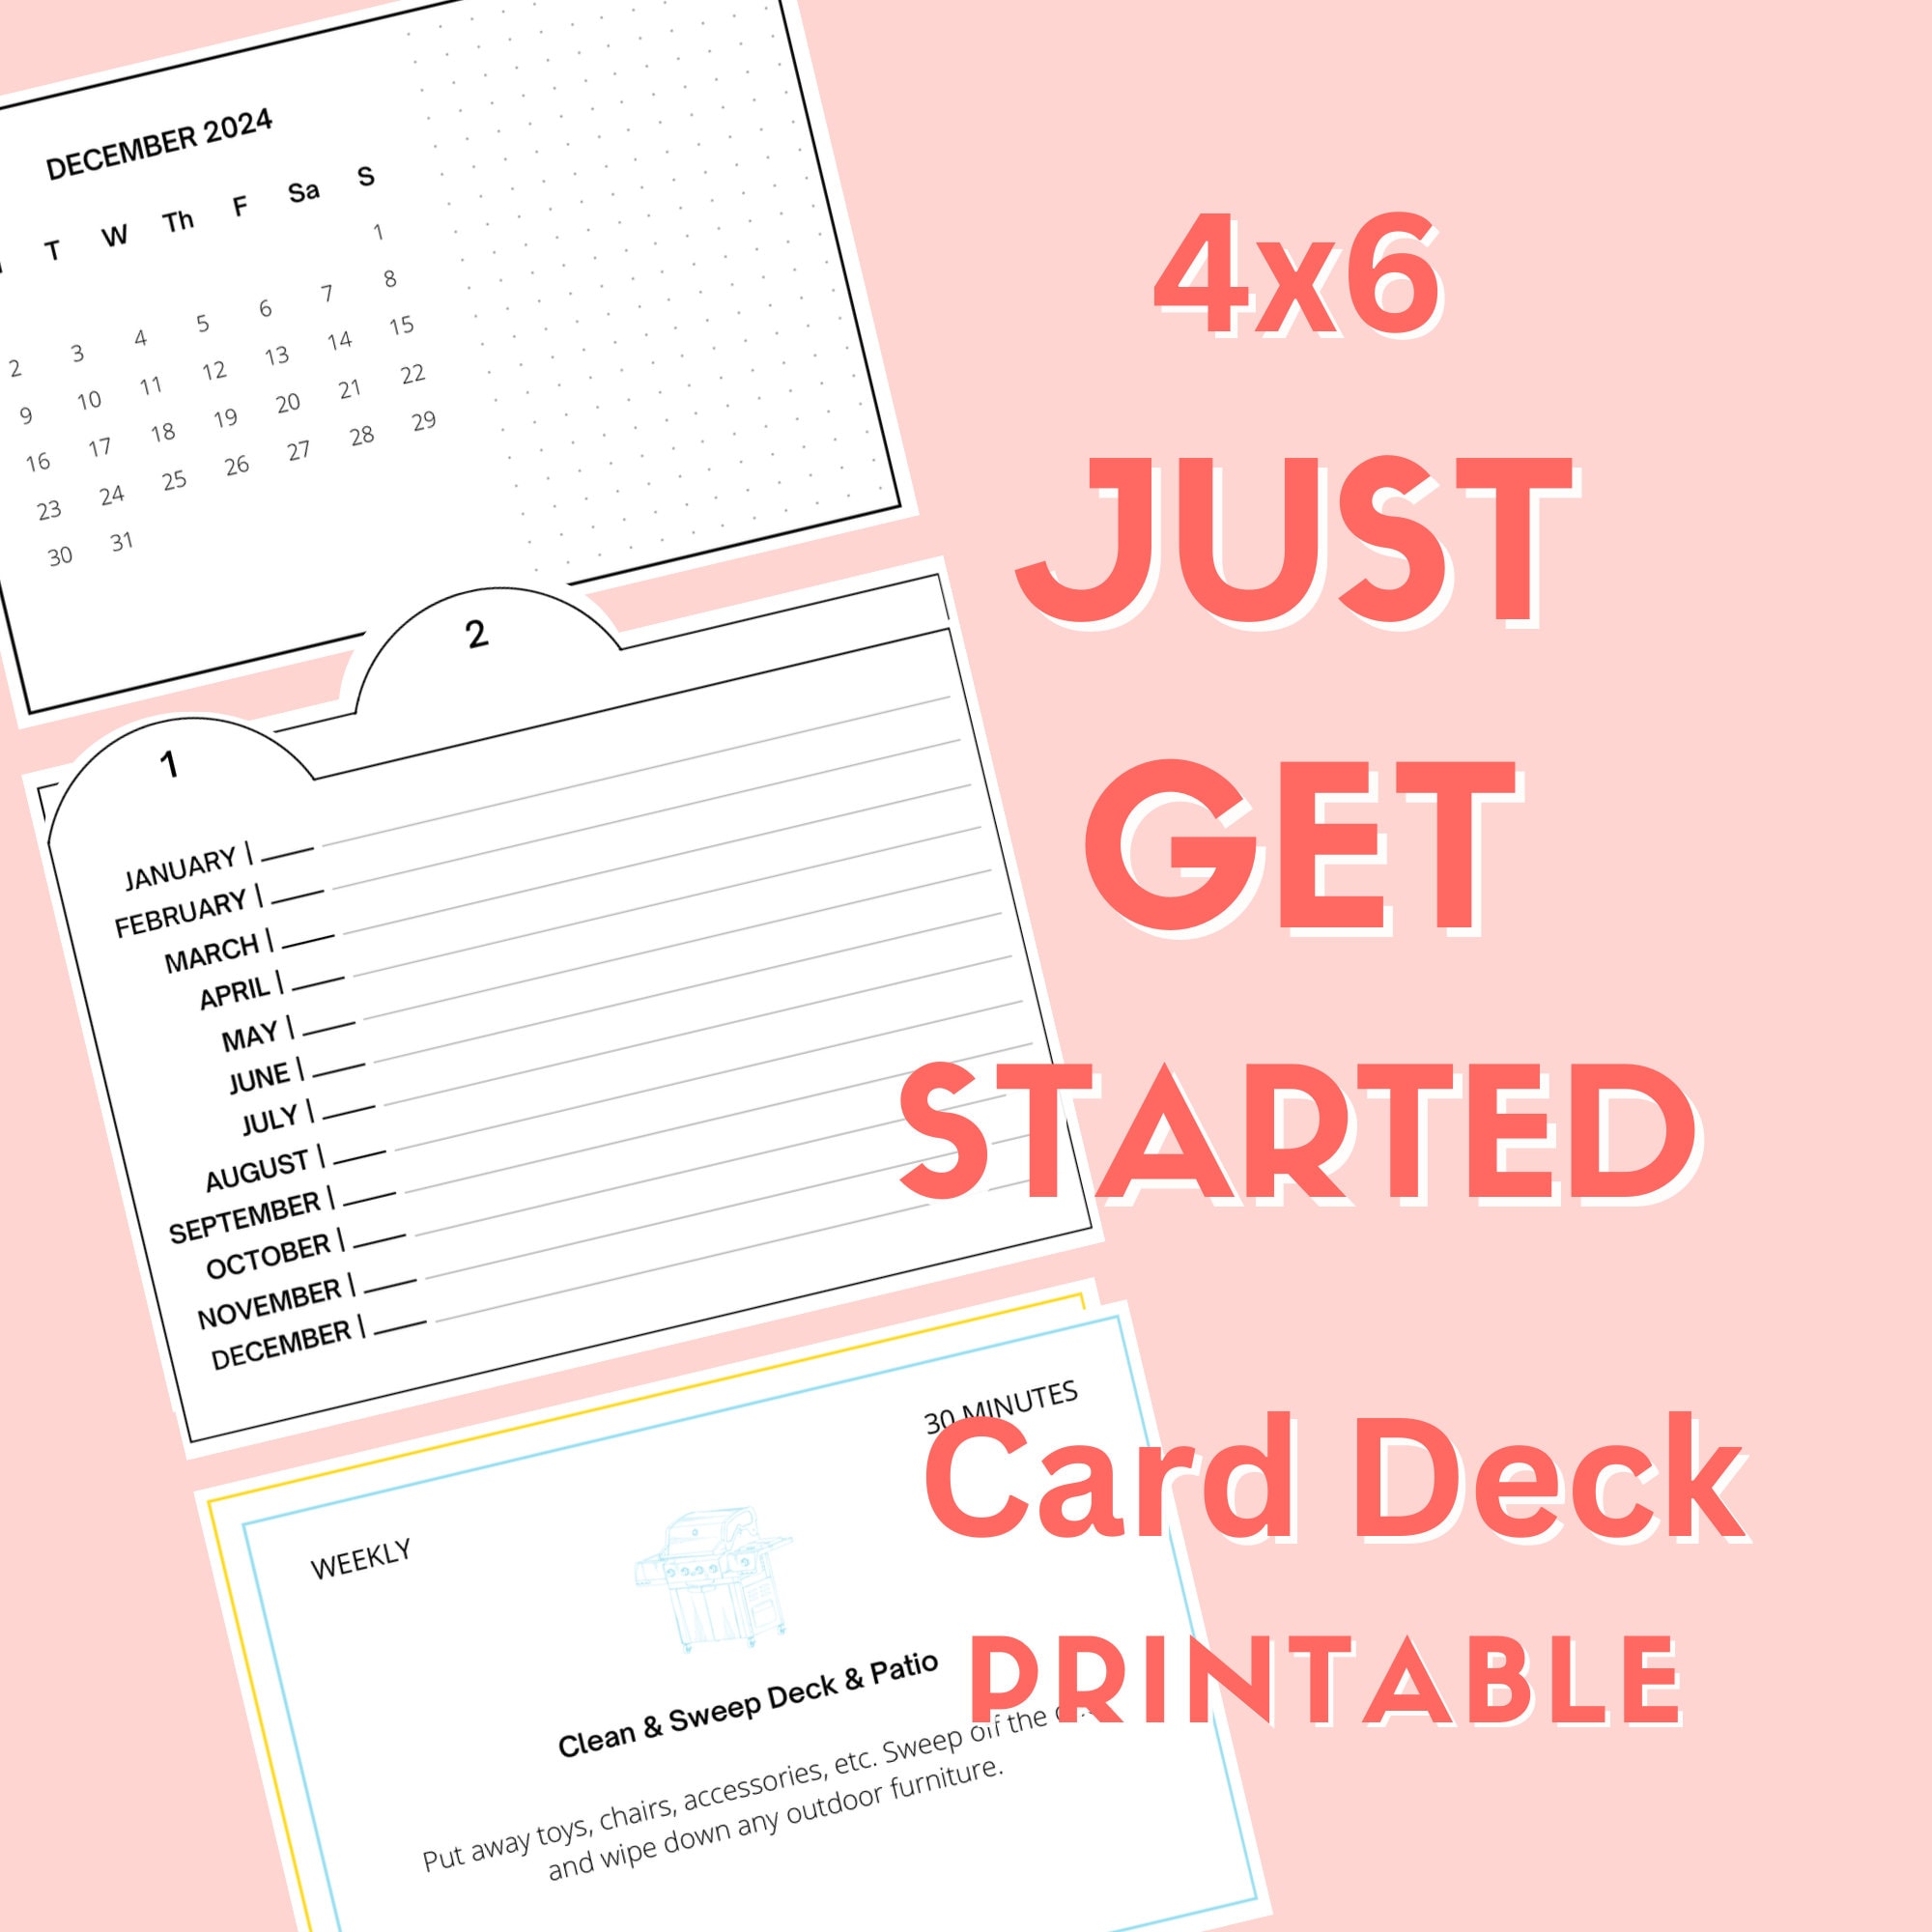 Printable Scandi Craft 4x6 Tabbed Index Cards - Free Printables Online